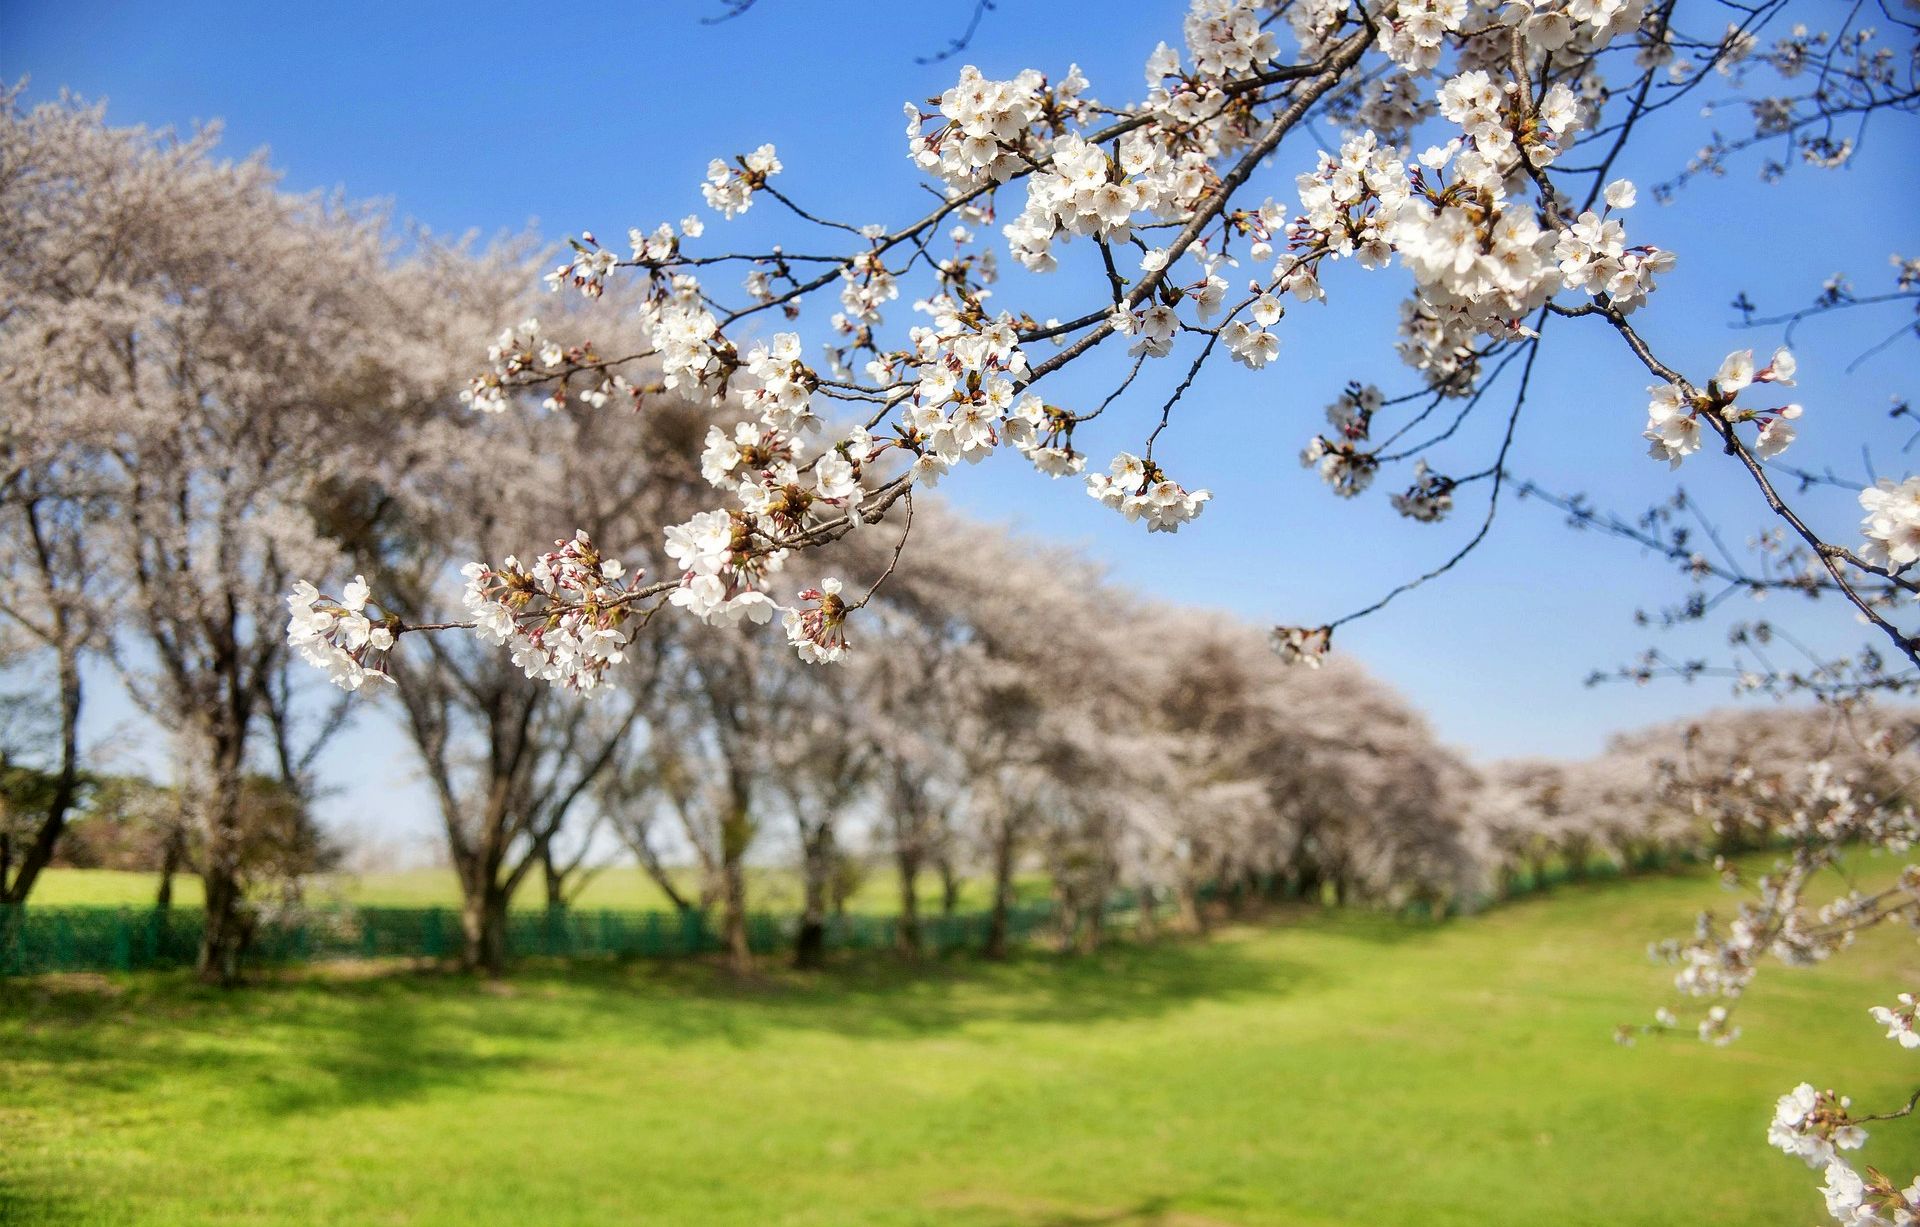 Alfarnate in Spain celebrates a cherry blossom festival